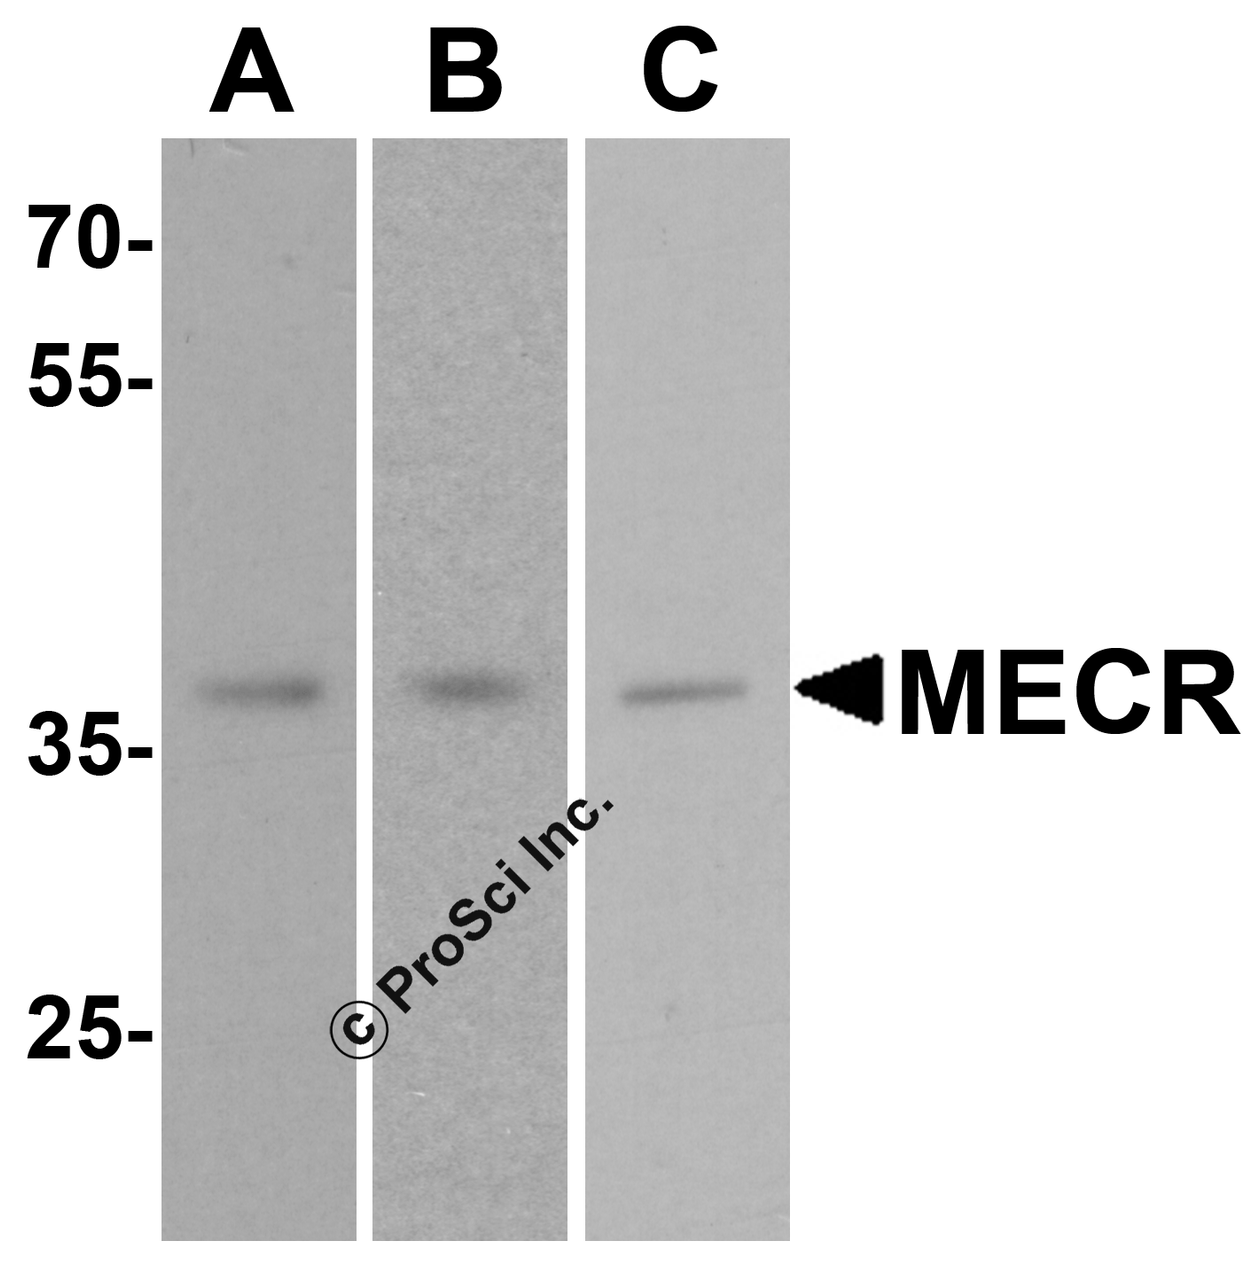 Western blot analysis of MECR in (A) human brain tissue, (B) mouse brain tissue, and (C) rat brain tissue lysate with MECR antibody at 1 ug/mL.